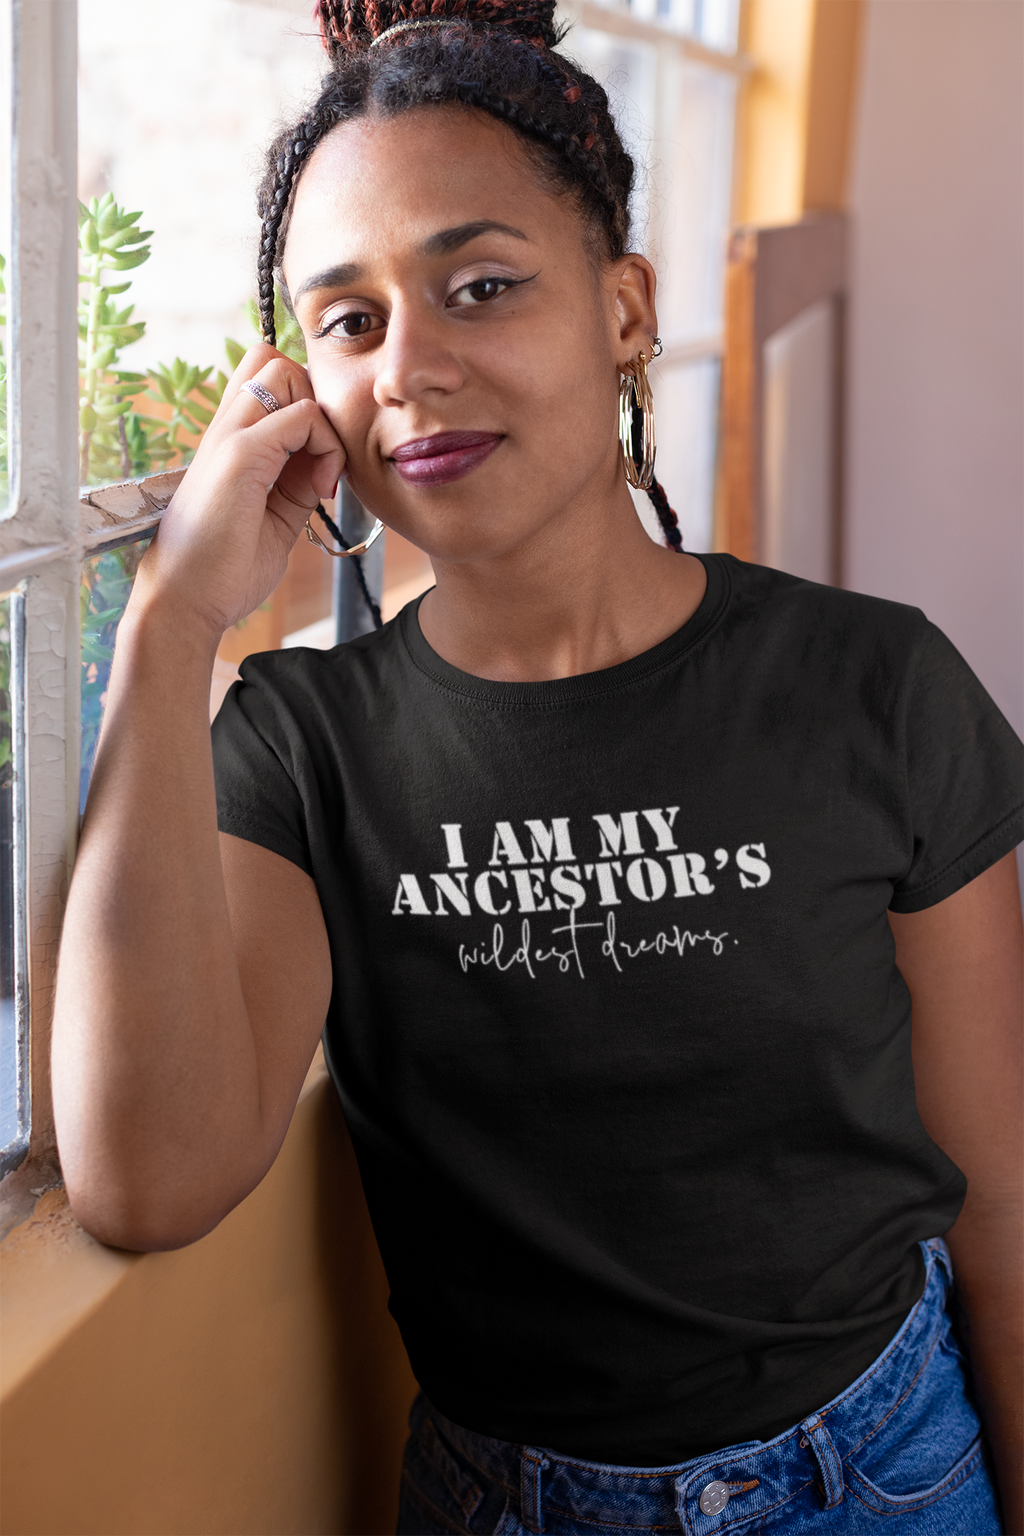 I'm My Ancestor's Wildest Dreams T-shirt